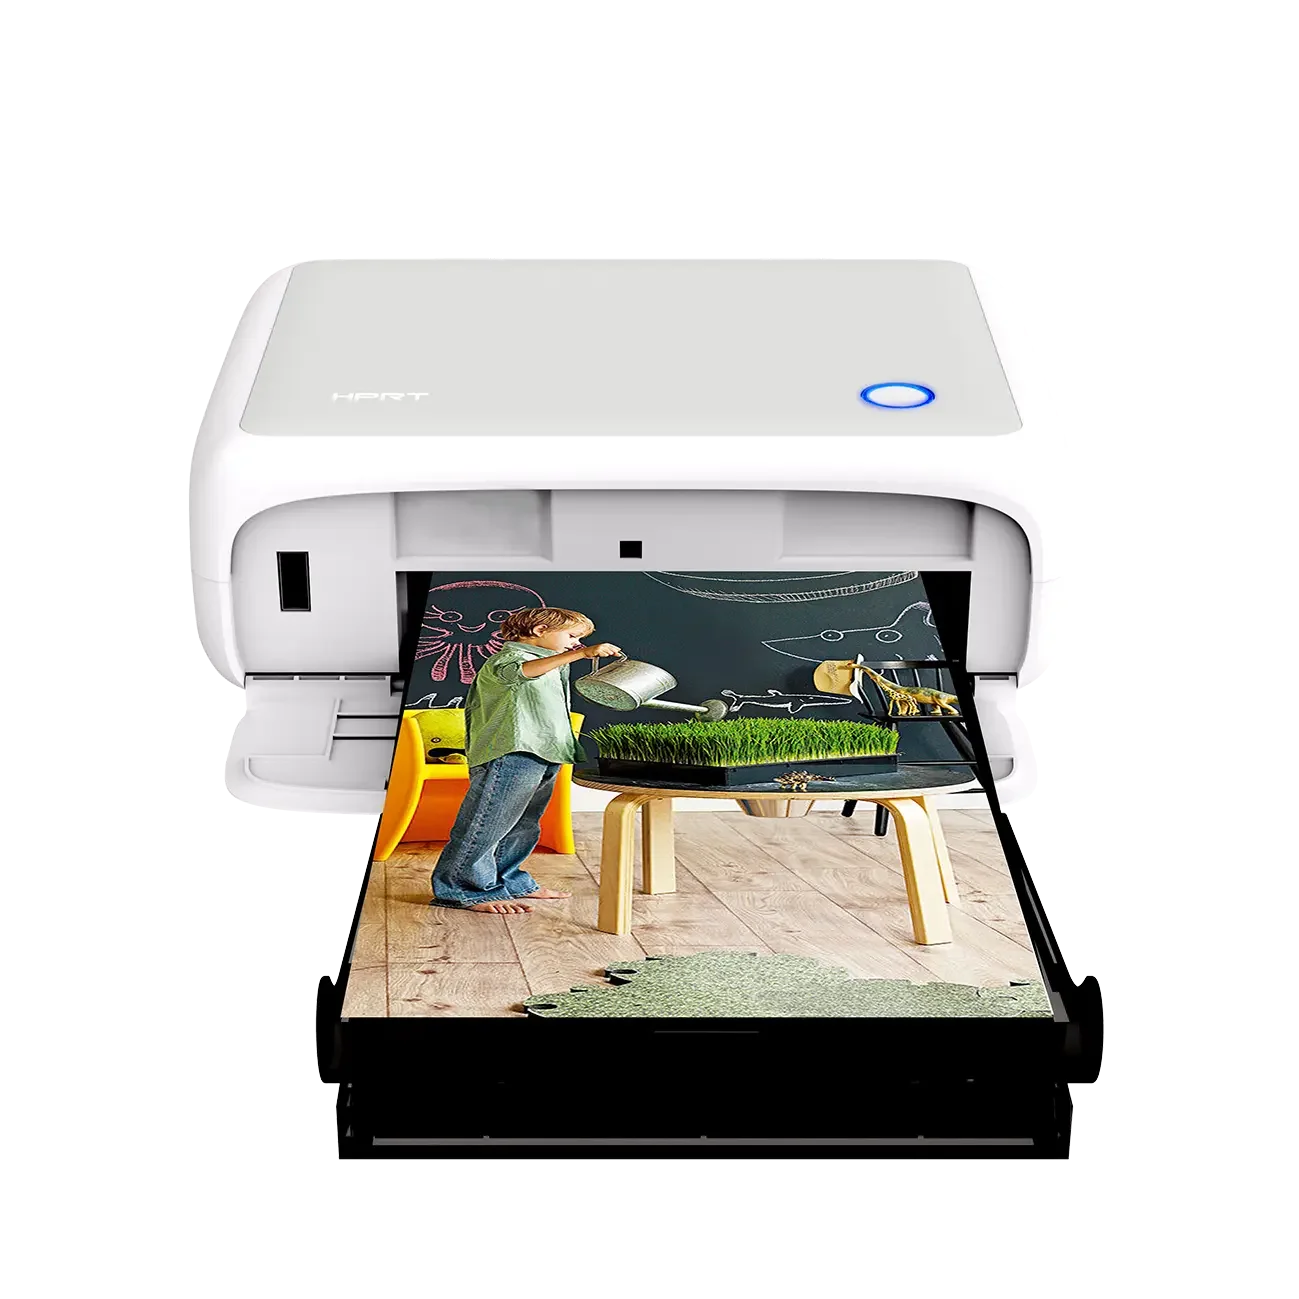 CP4000L 4x6'' Impresora fotográfica térmica inalámbrica Impresora de fotos  portátil Conexión Wi HPRT Impresora